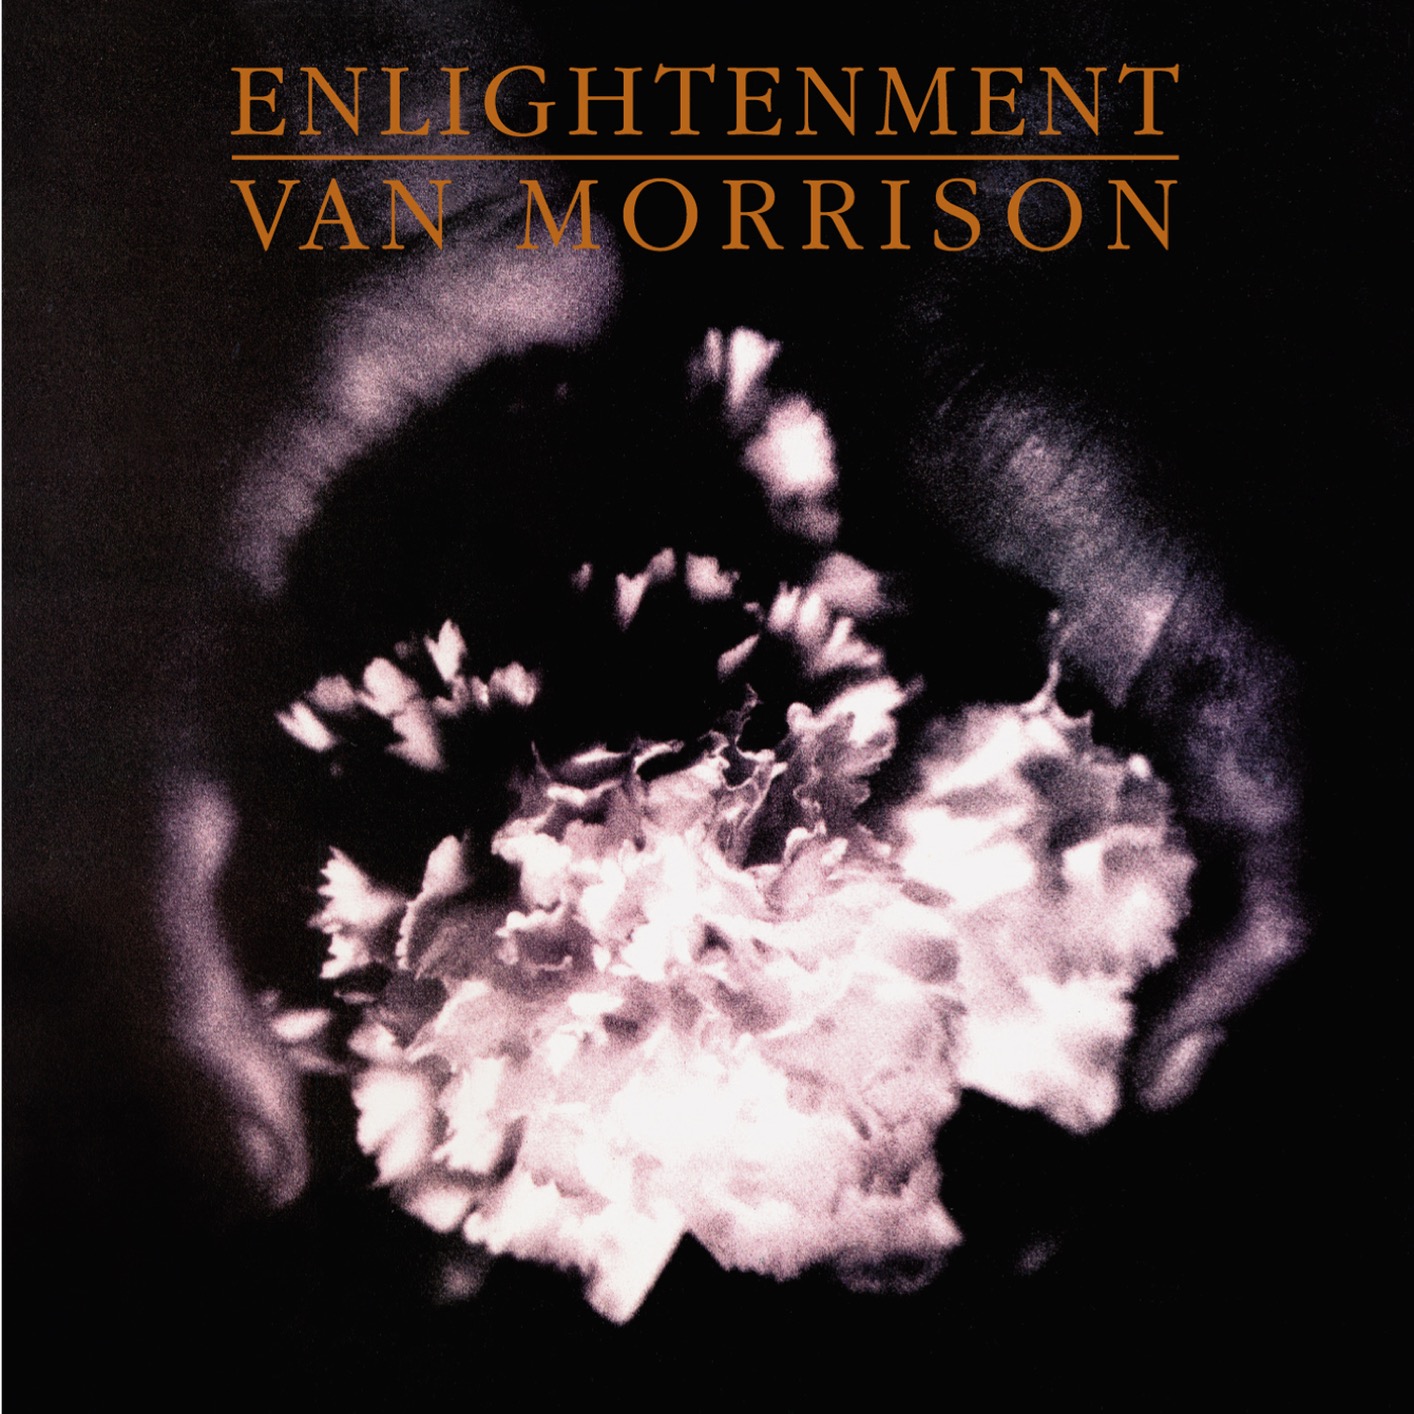 Van Morrison - Enlightenment (Remastered) (1990/2020) [FLAC 24bit/96kHz]